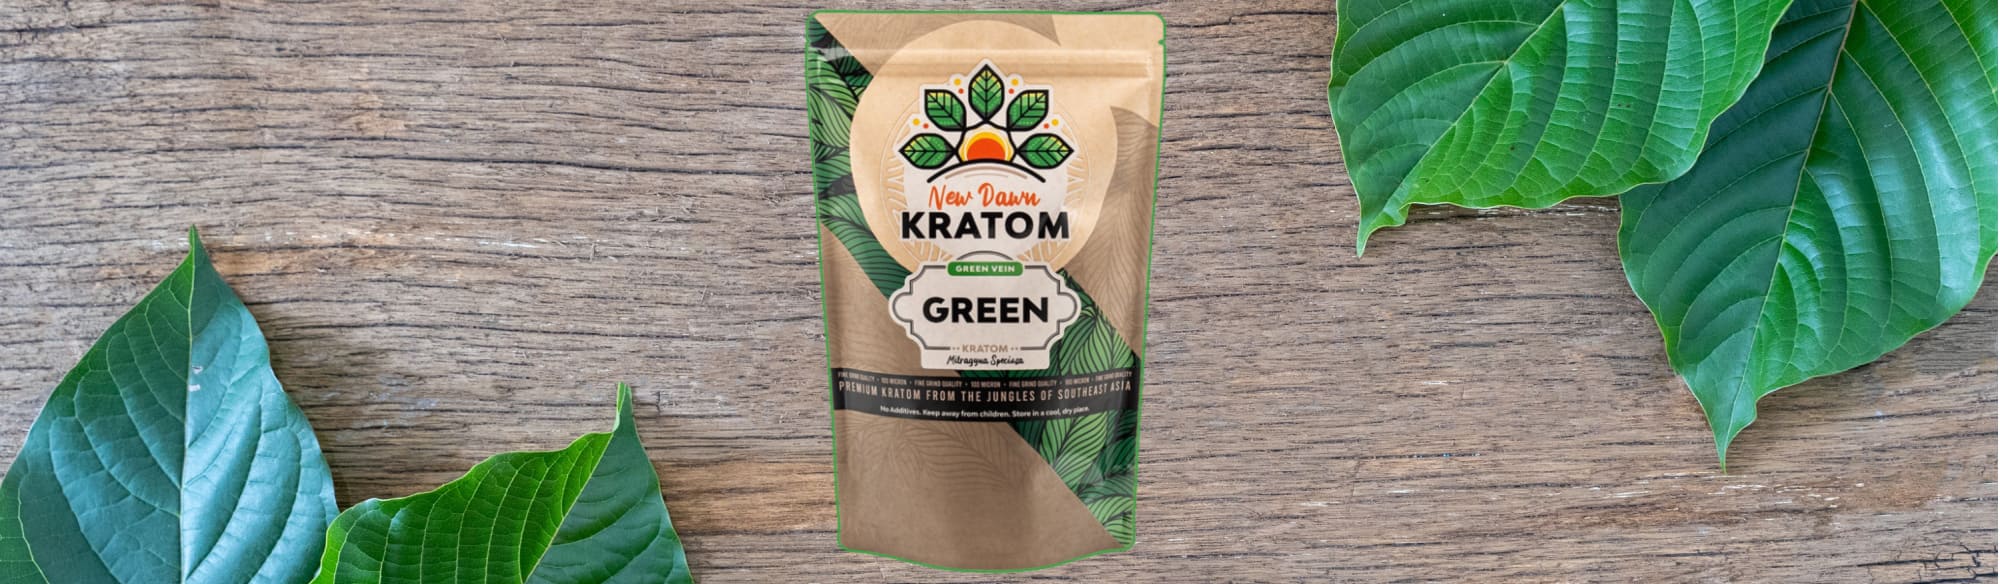 image of green borneo kratom